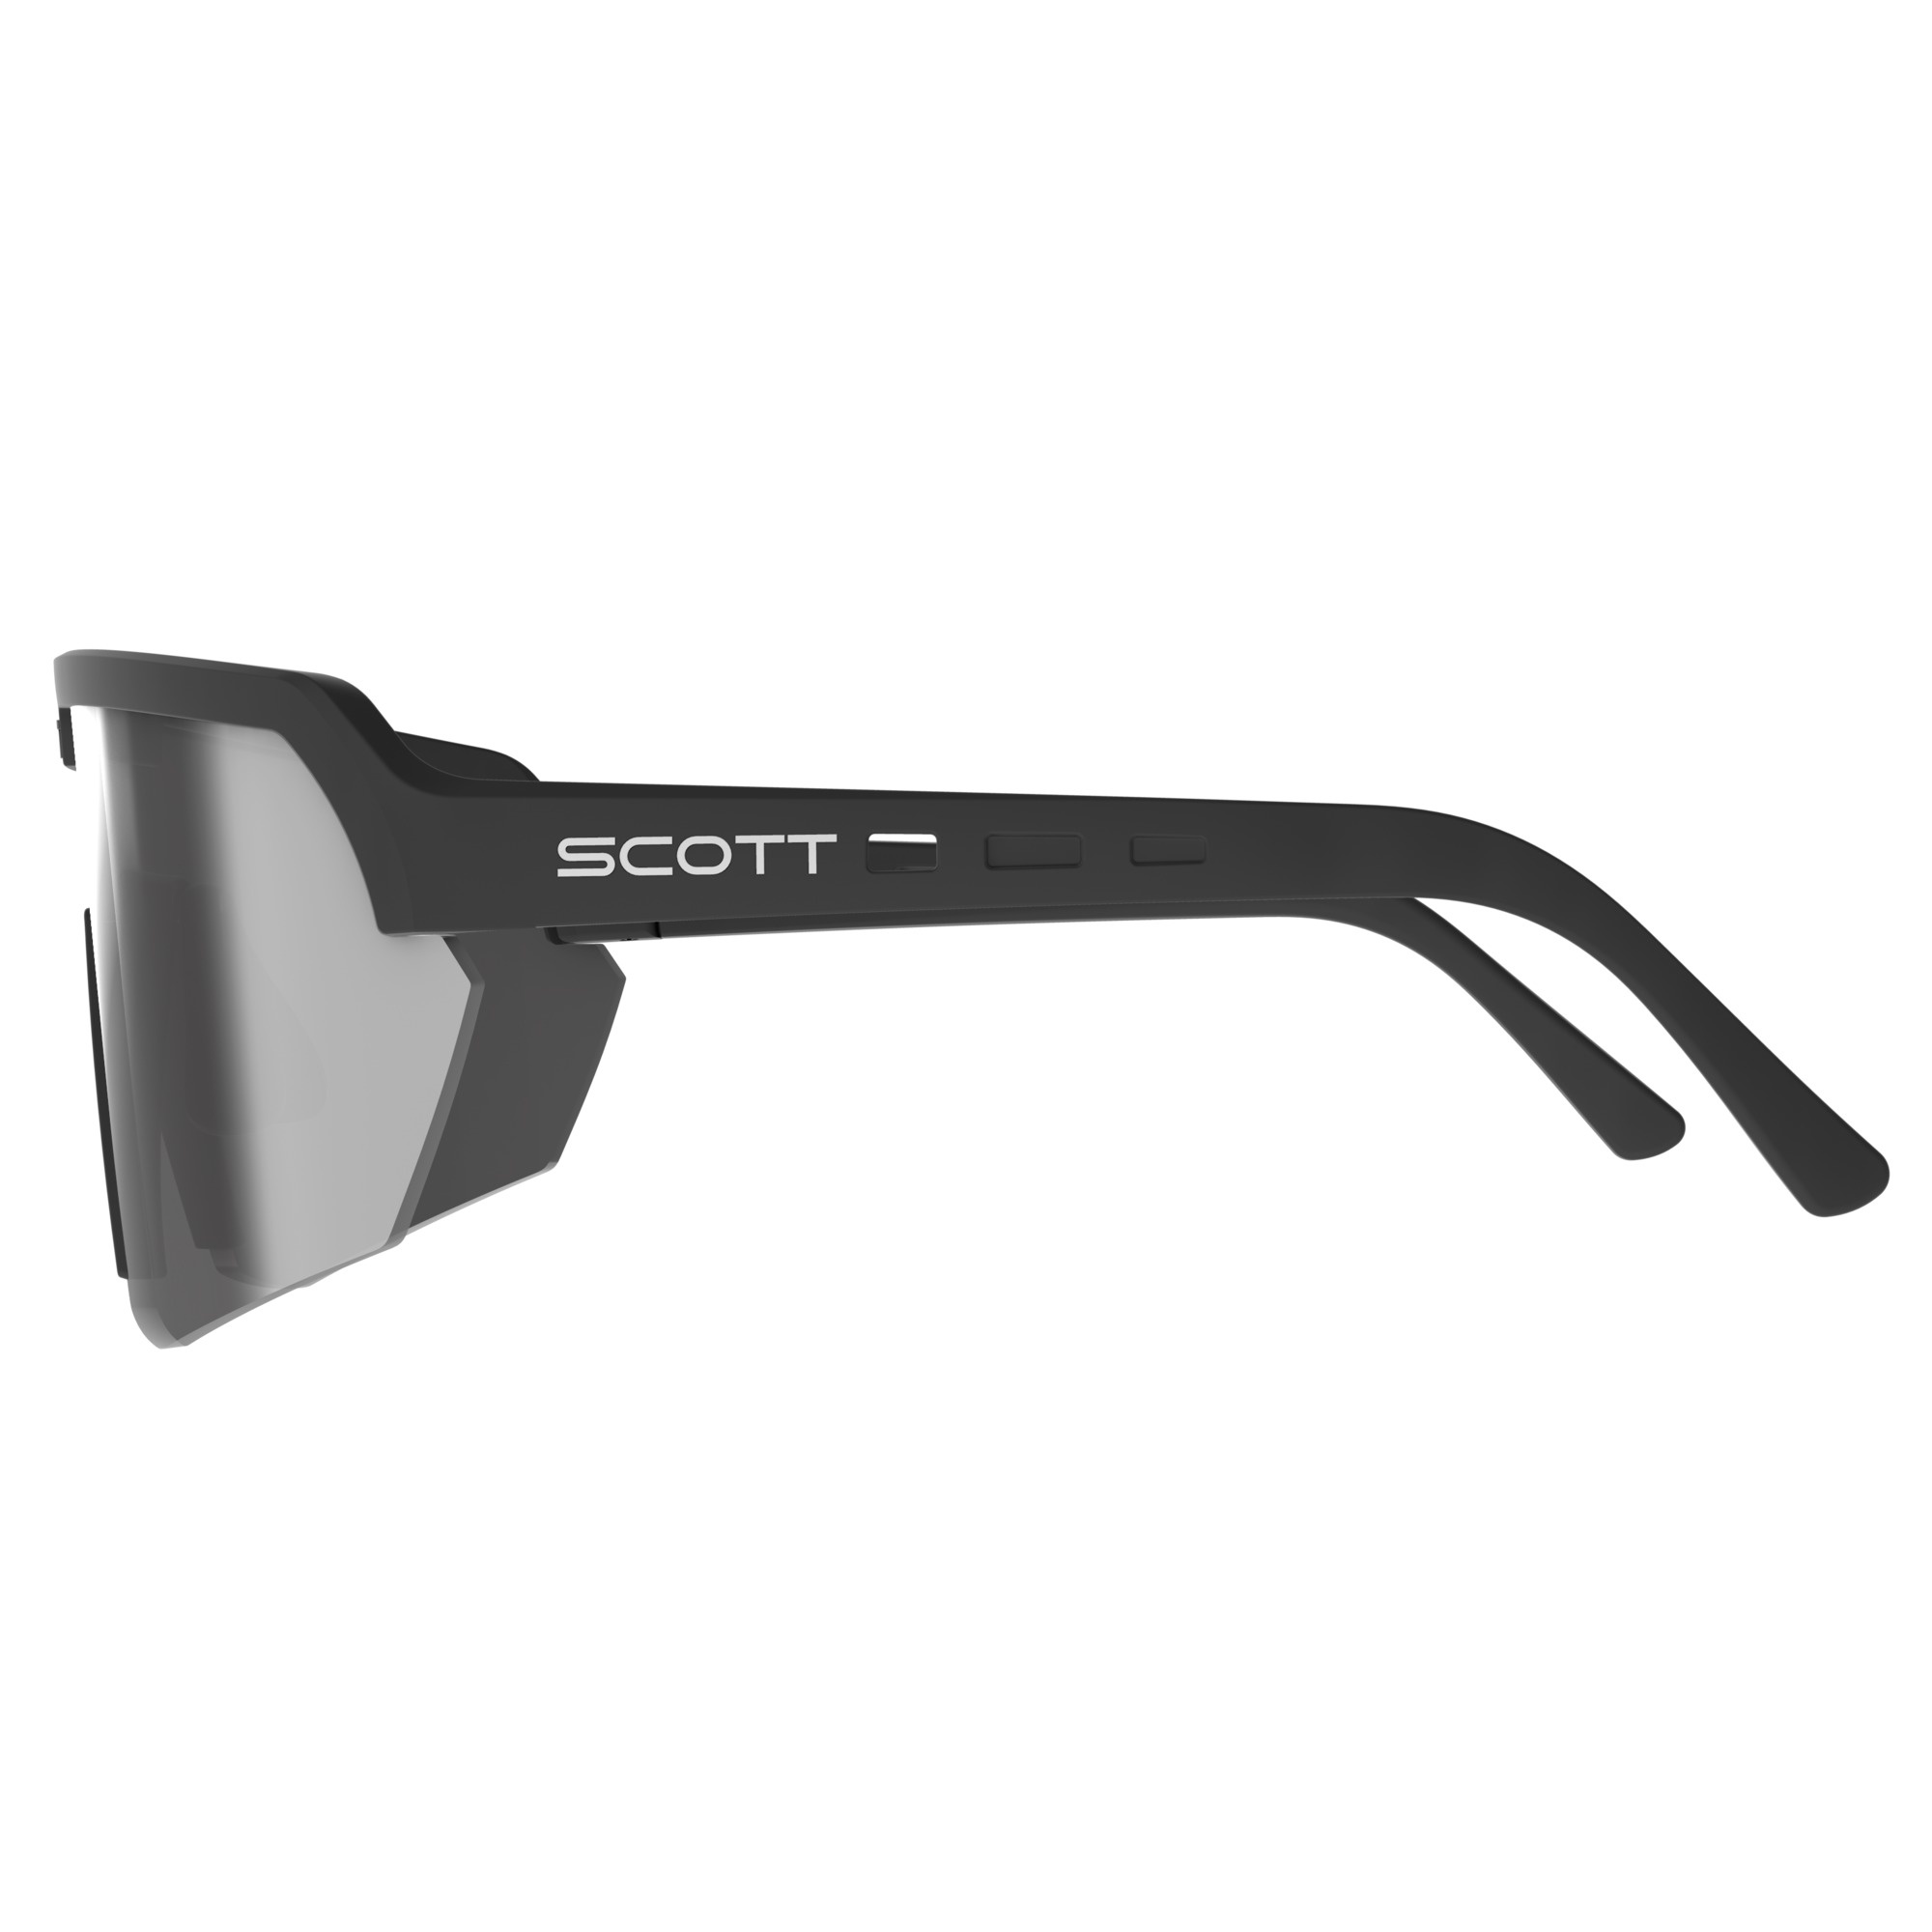 Beklædning - Cykelbriller - Scott Sport Shield LS Cykelbrille - Fotokromisk - Sort